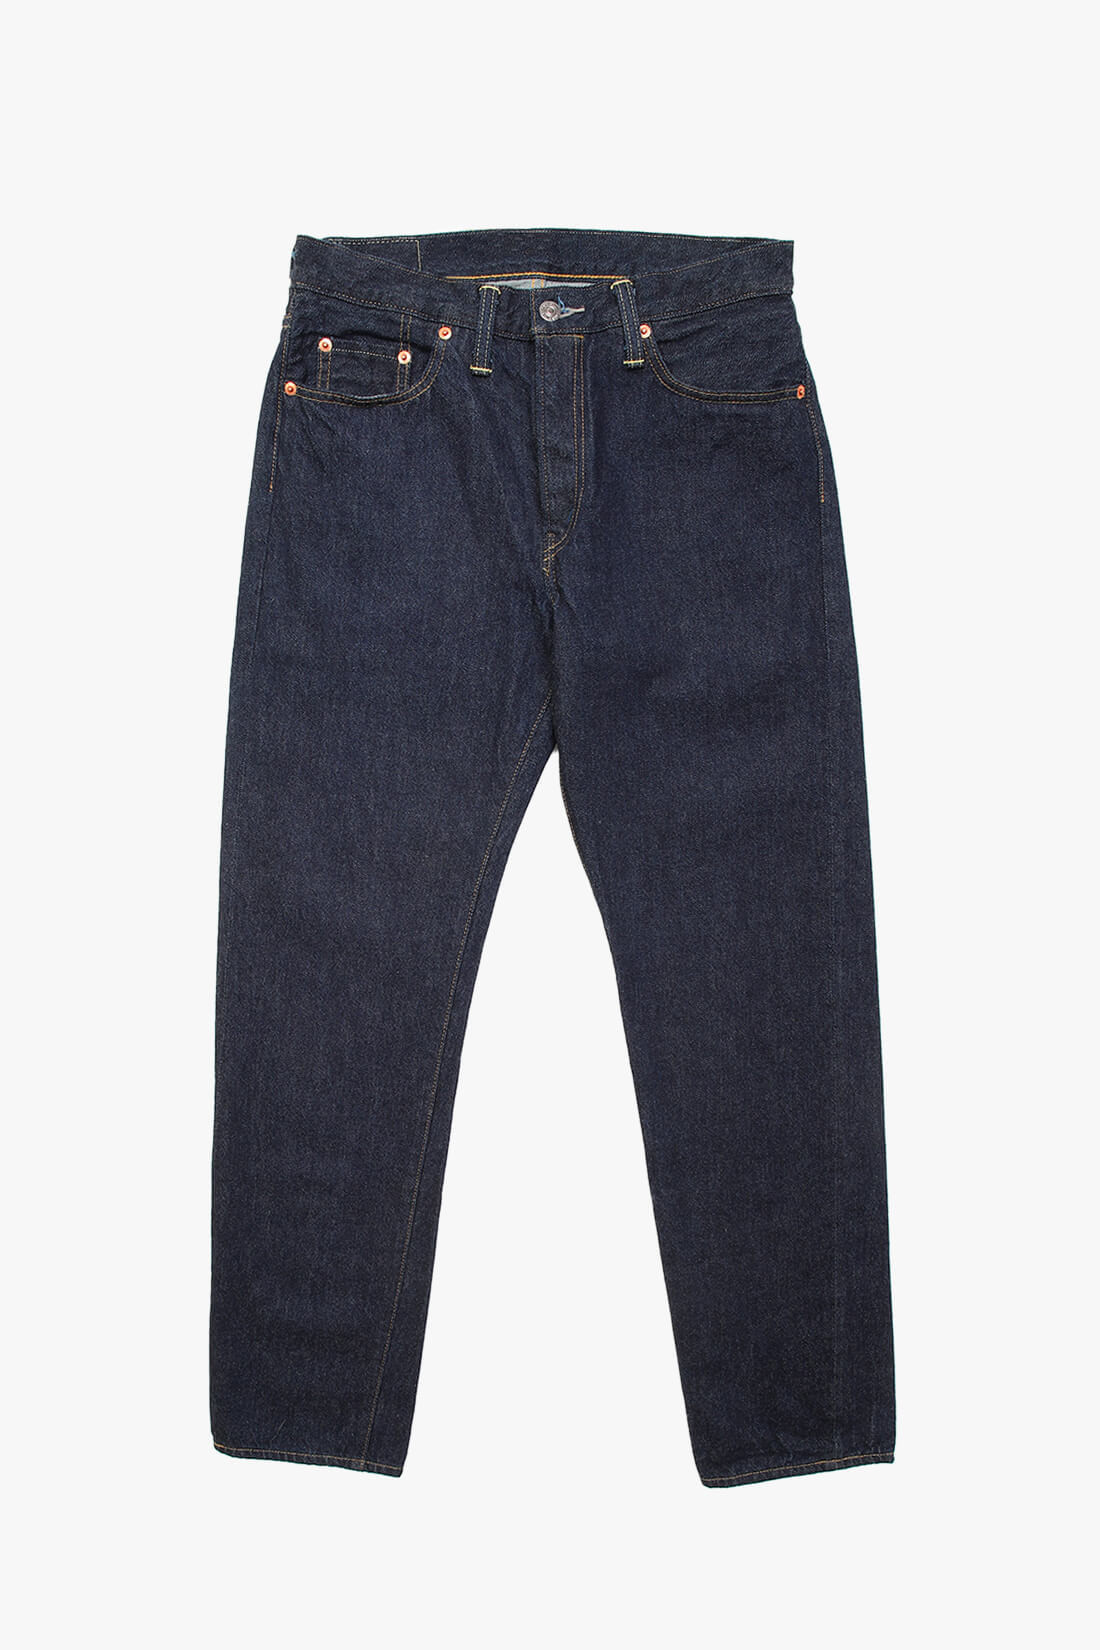 Levi's ® vintage clothing 1954 501 ™ jeans new rinsed N0606 v2 - ...